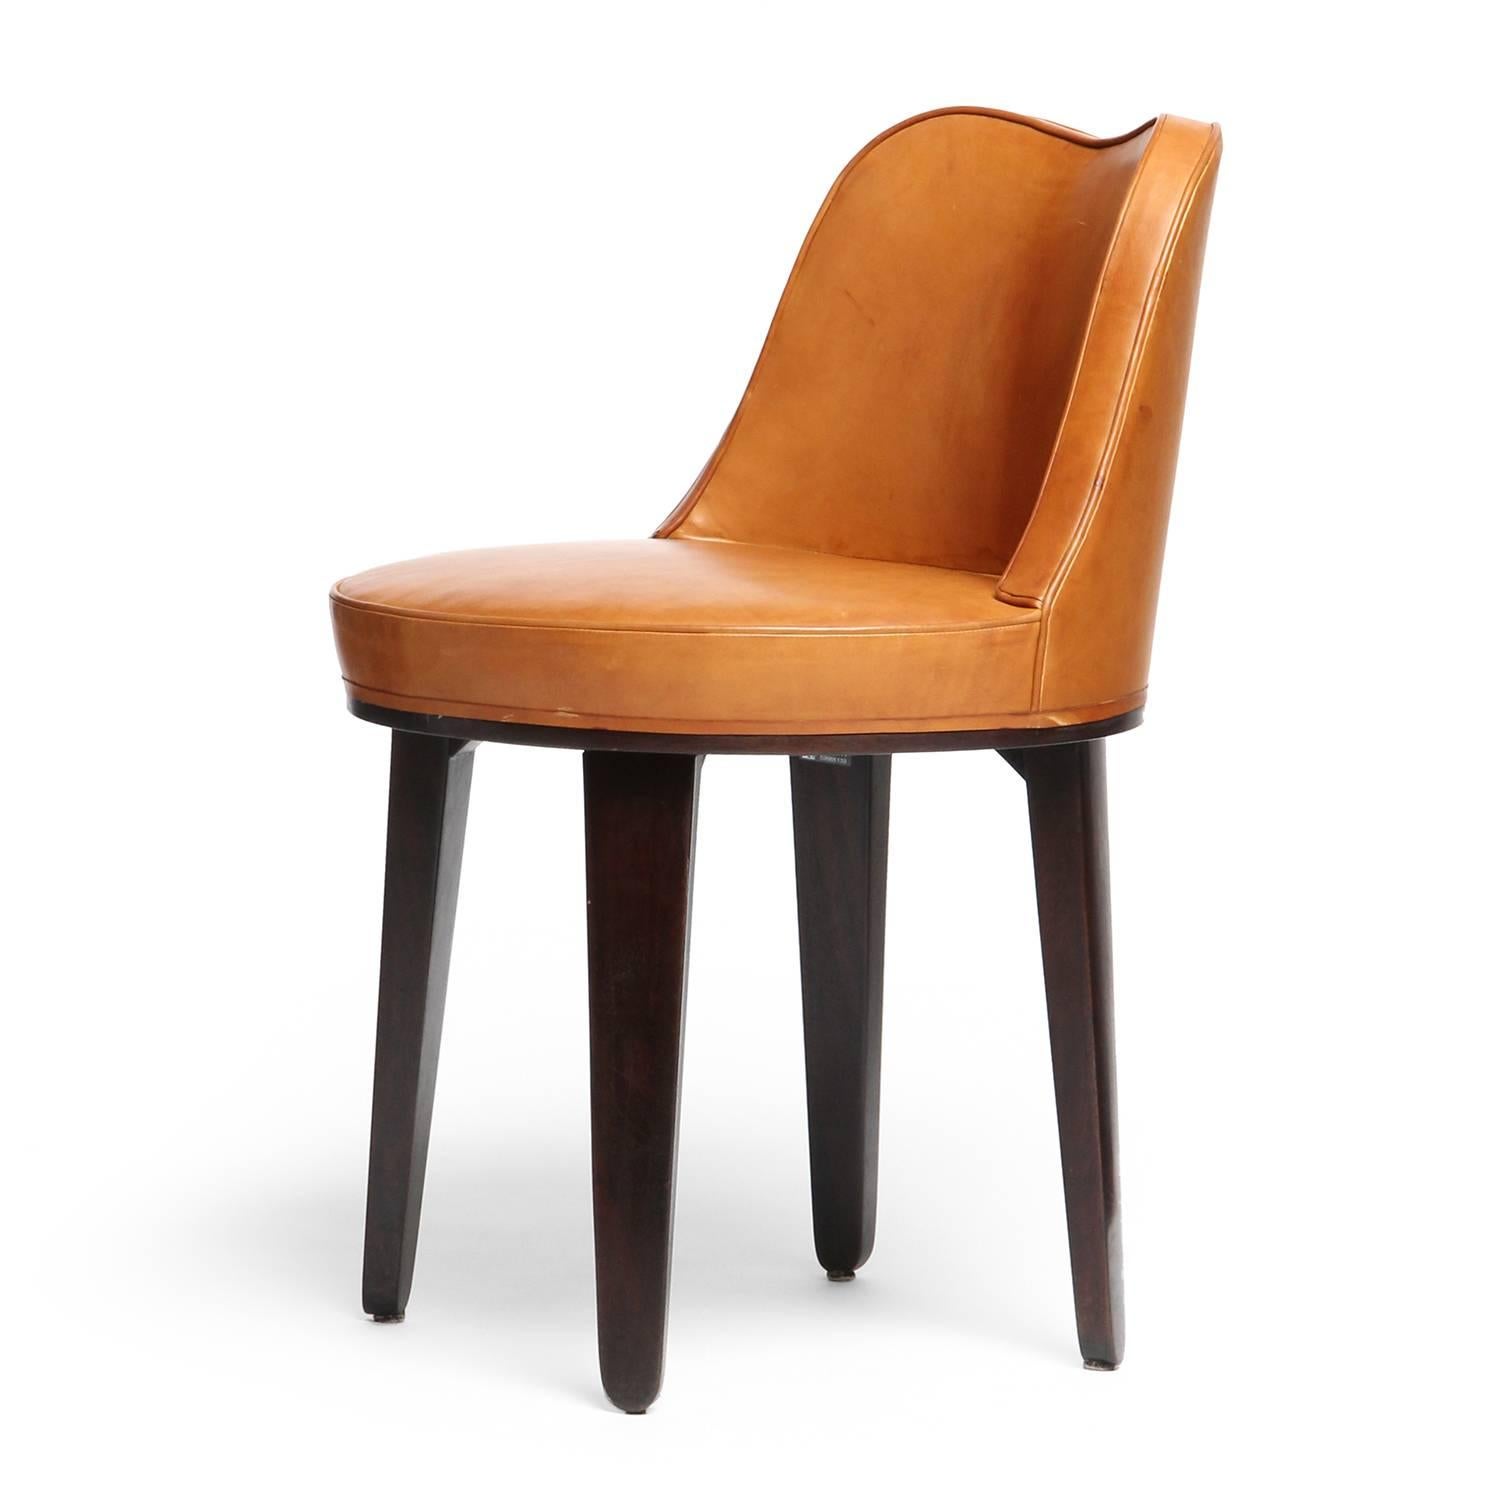 Mid-20th Century Swivel Chair by Edward Wormley